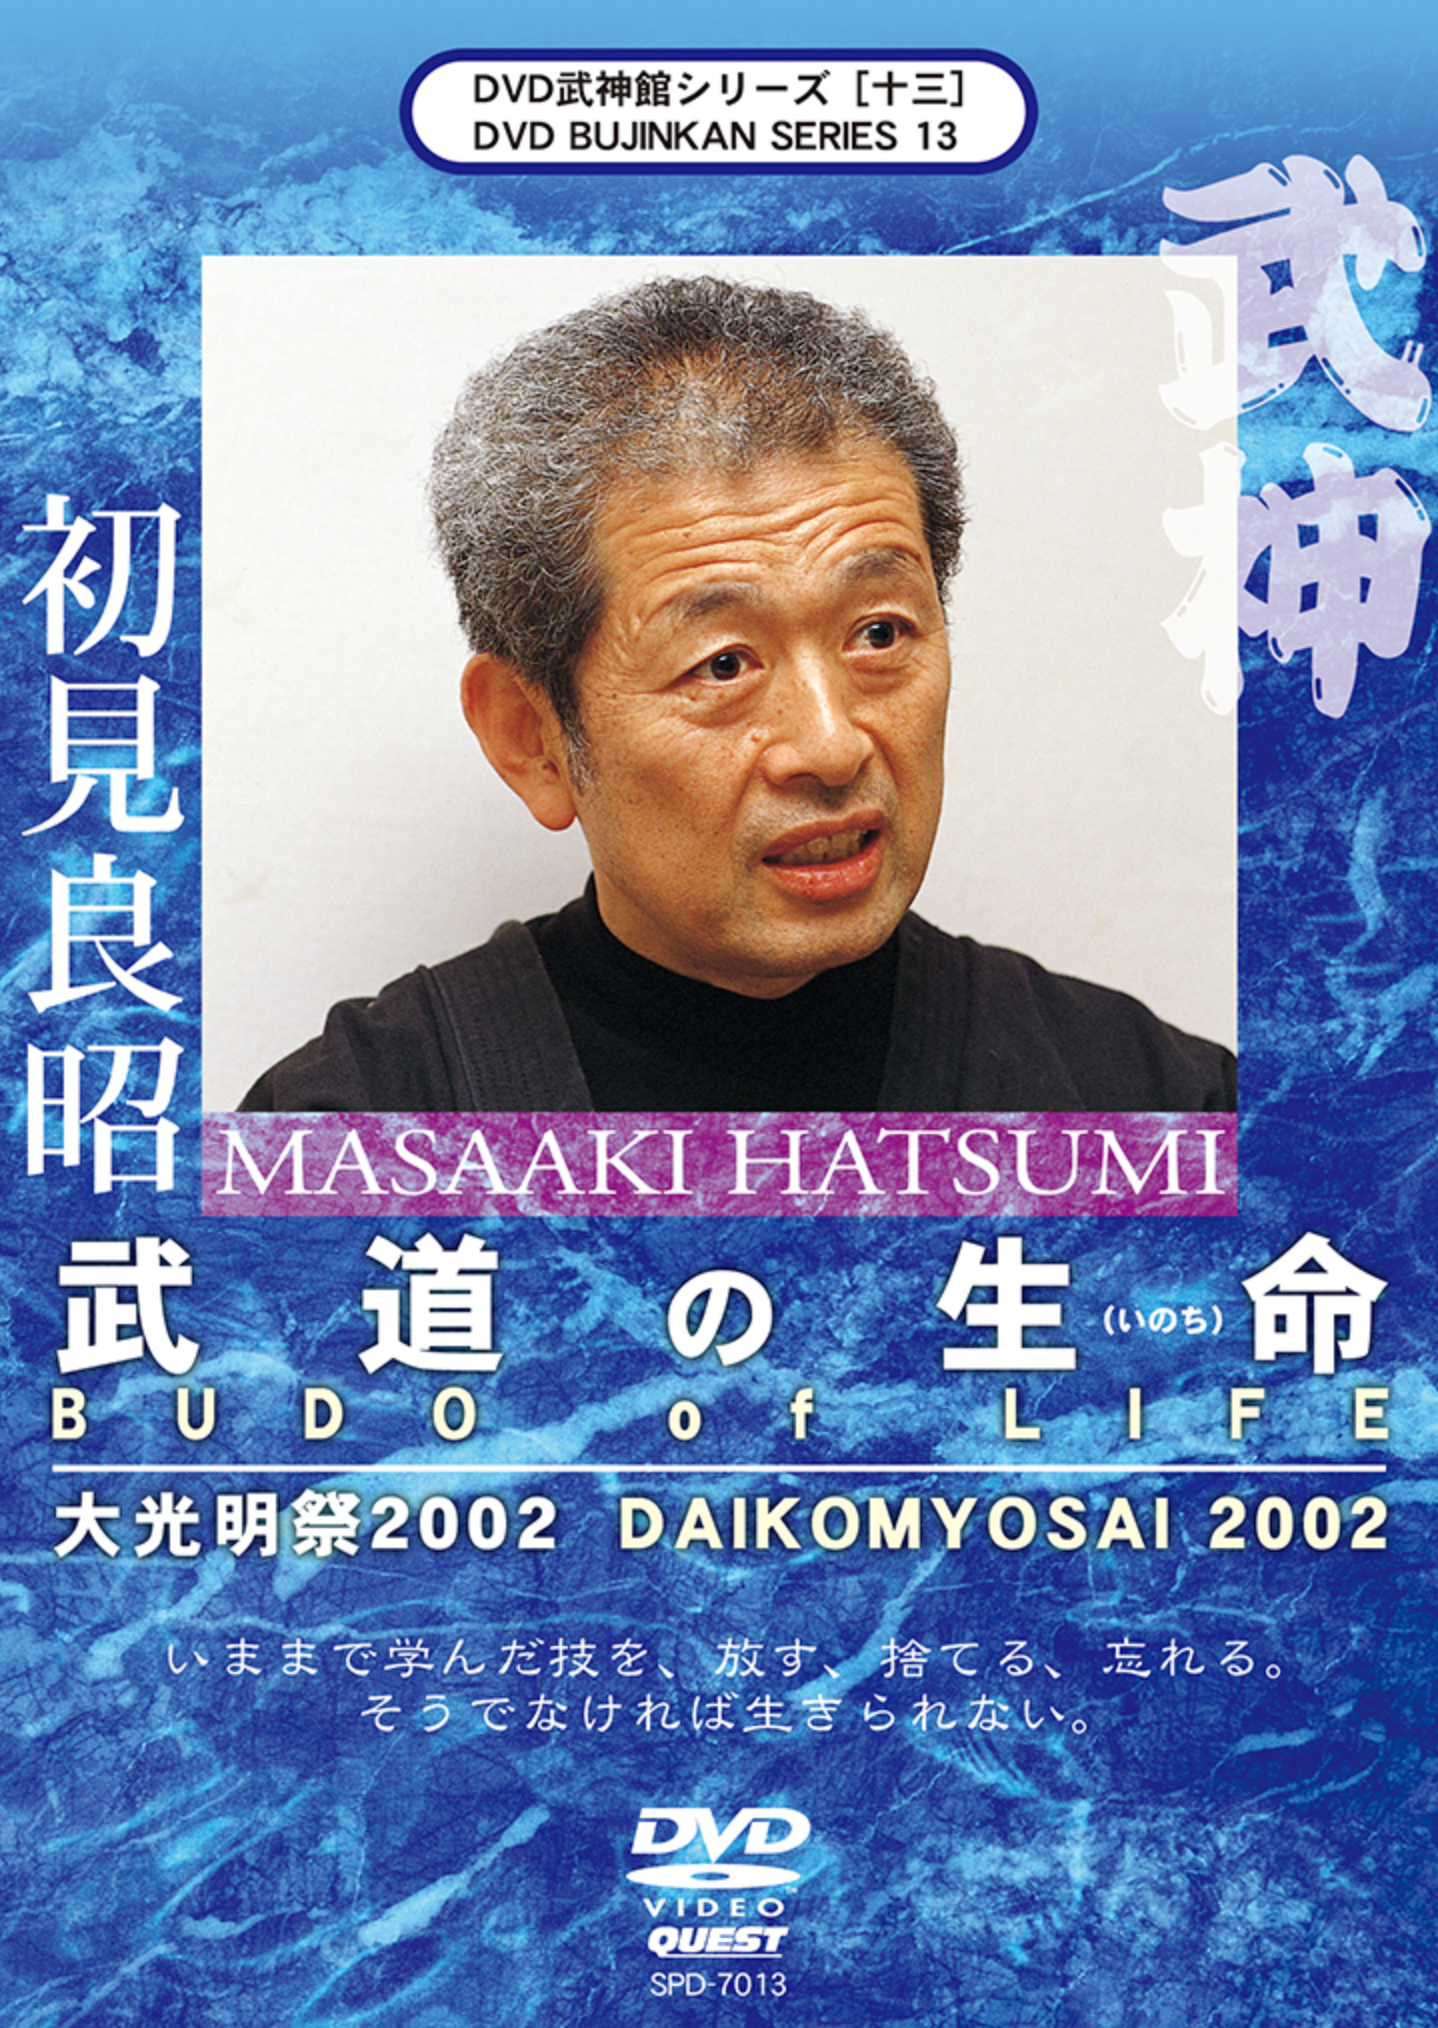 Bujinkan DVD Series 13: Budo of Life with Masaaki Hatsumi - Budovideos Inc